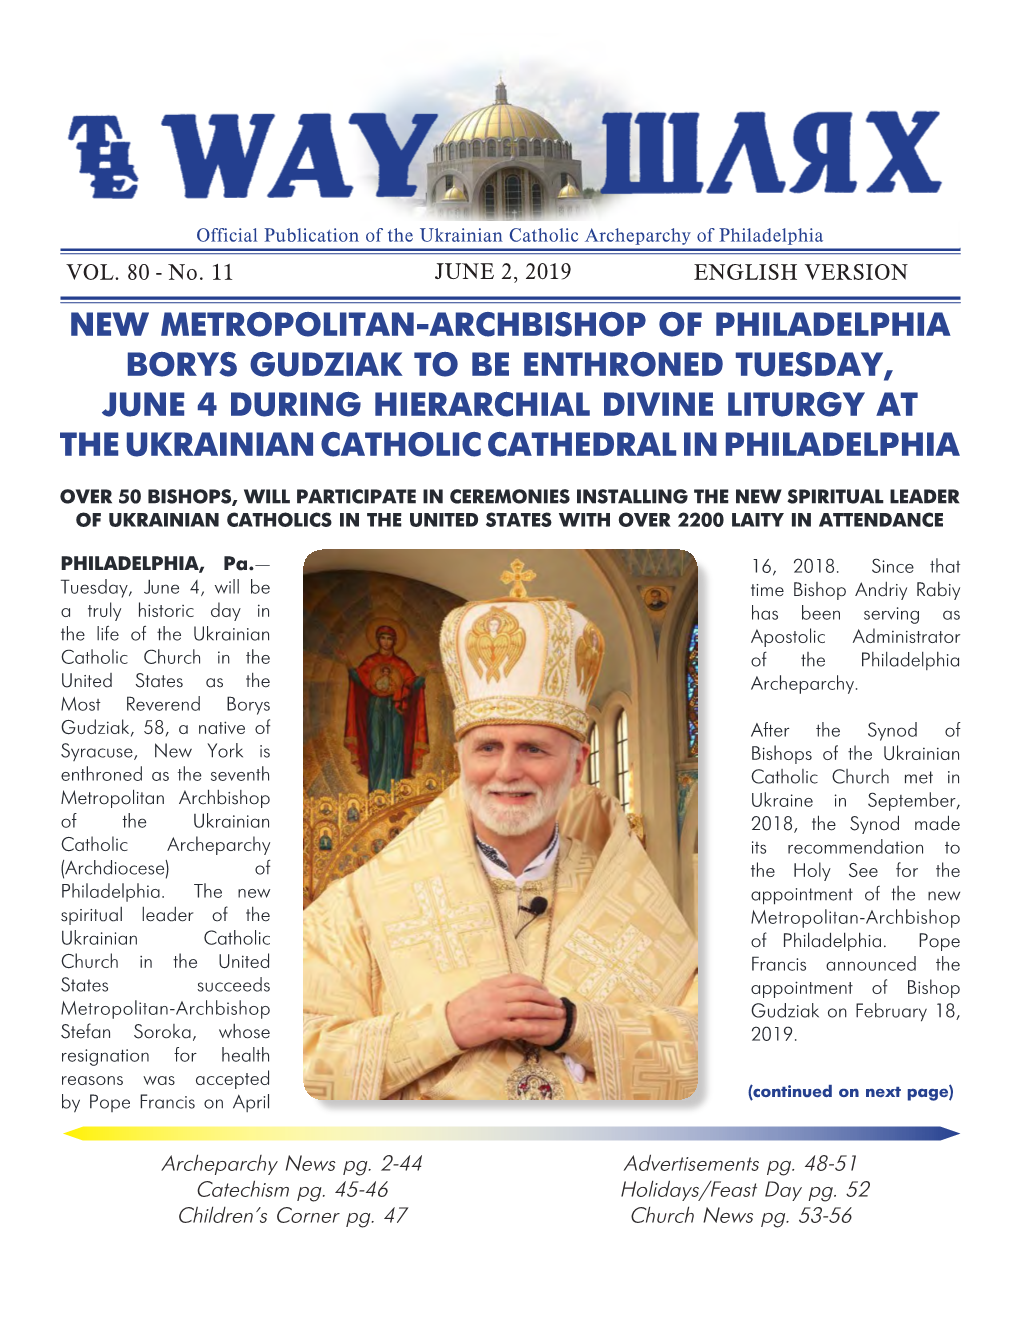 New Metropolitan-Archbishop